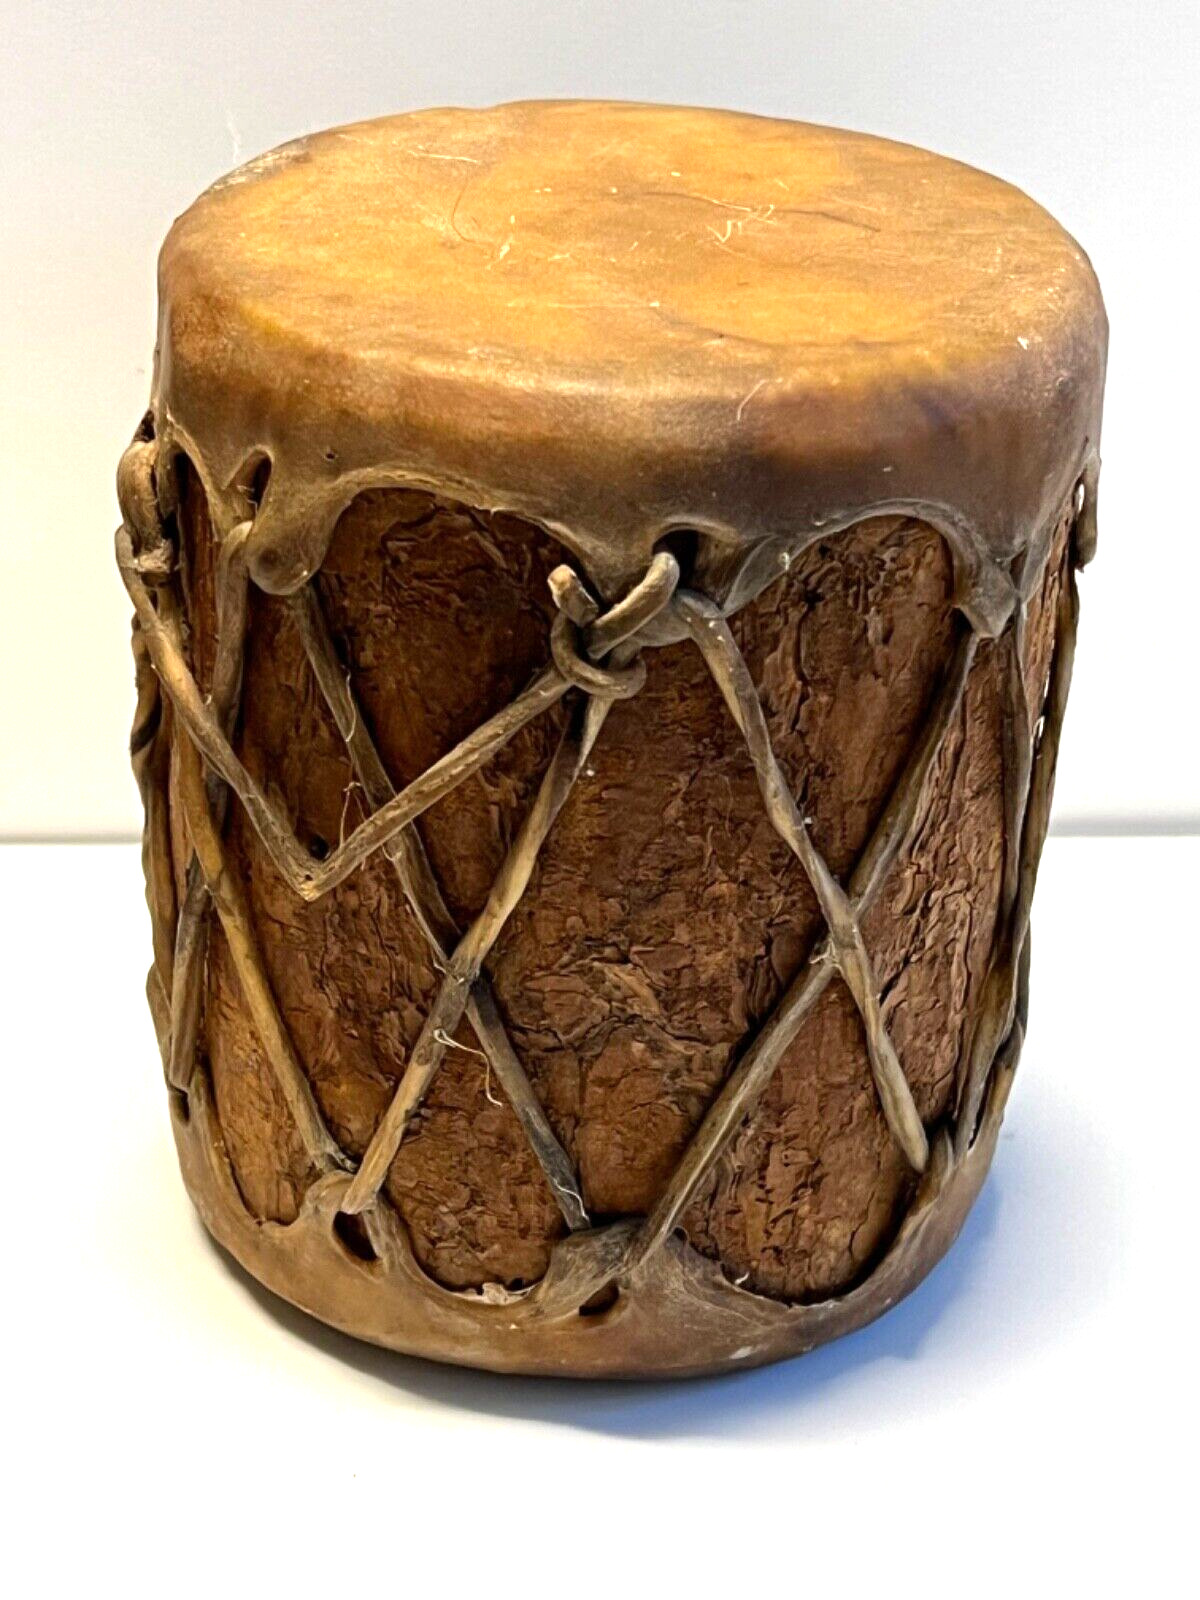 Original Vintage Native American Indian Drum; 1890s - 1930s